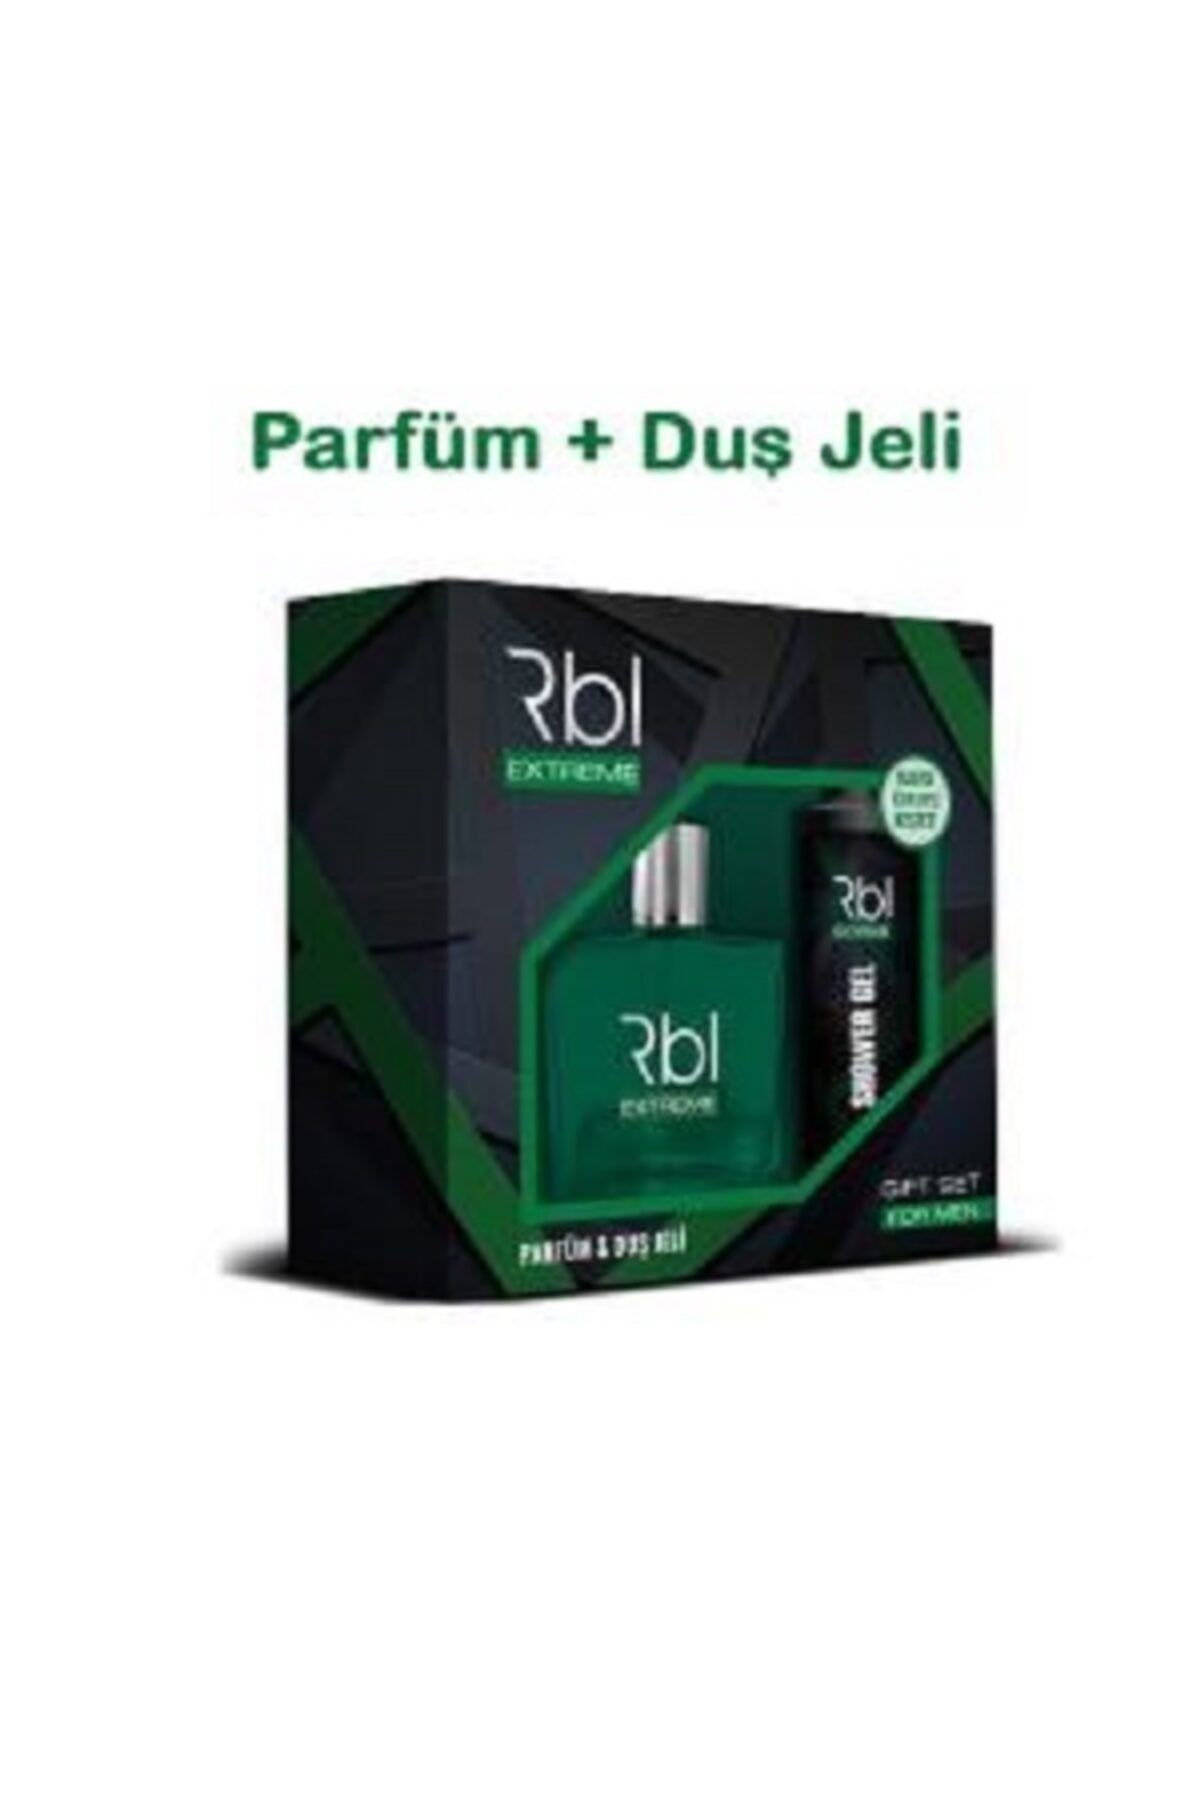 Rebul Orıjınal Rbl Extreme 90 Ml Parfüm + 200 Ml Duş Jeli Ikili Set